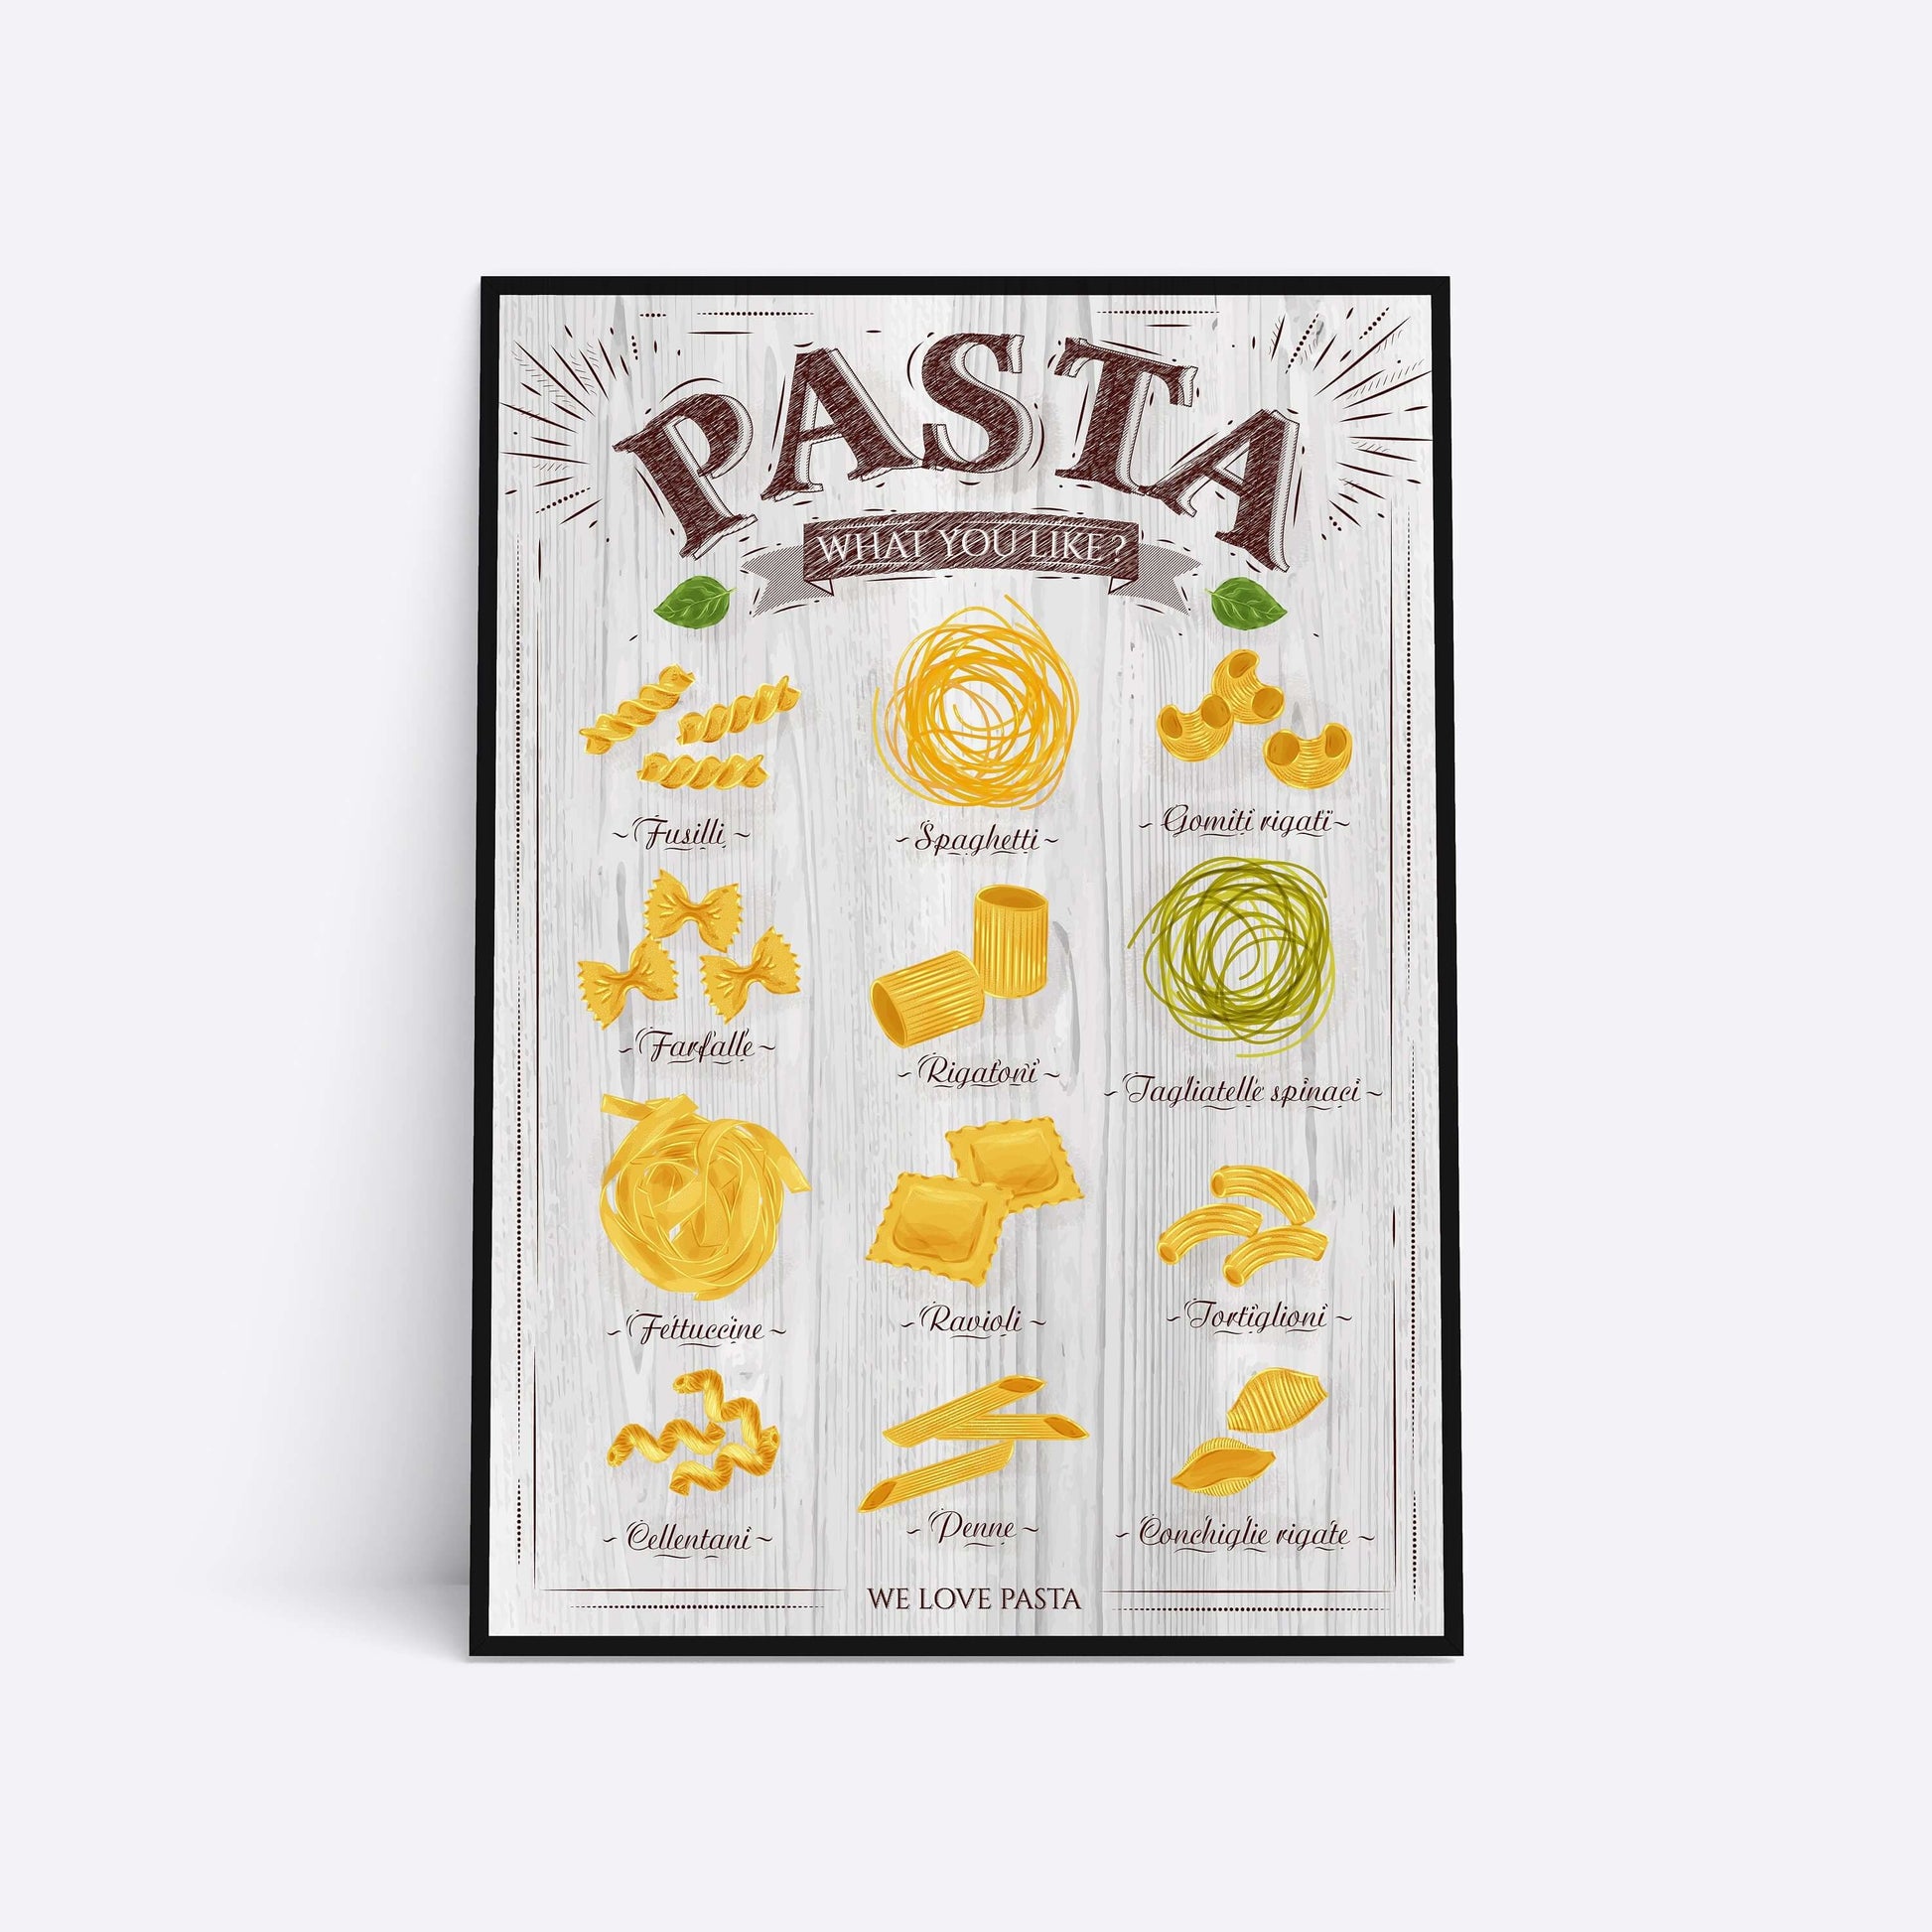 Pasta Guide Print, Pasta Guide, Types Of Pasta, Kitchen Wall Art, Kitchen Decor, Home Decor, Home Print, Wall Art